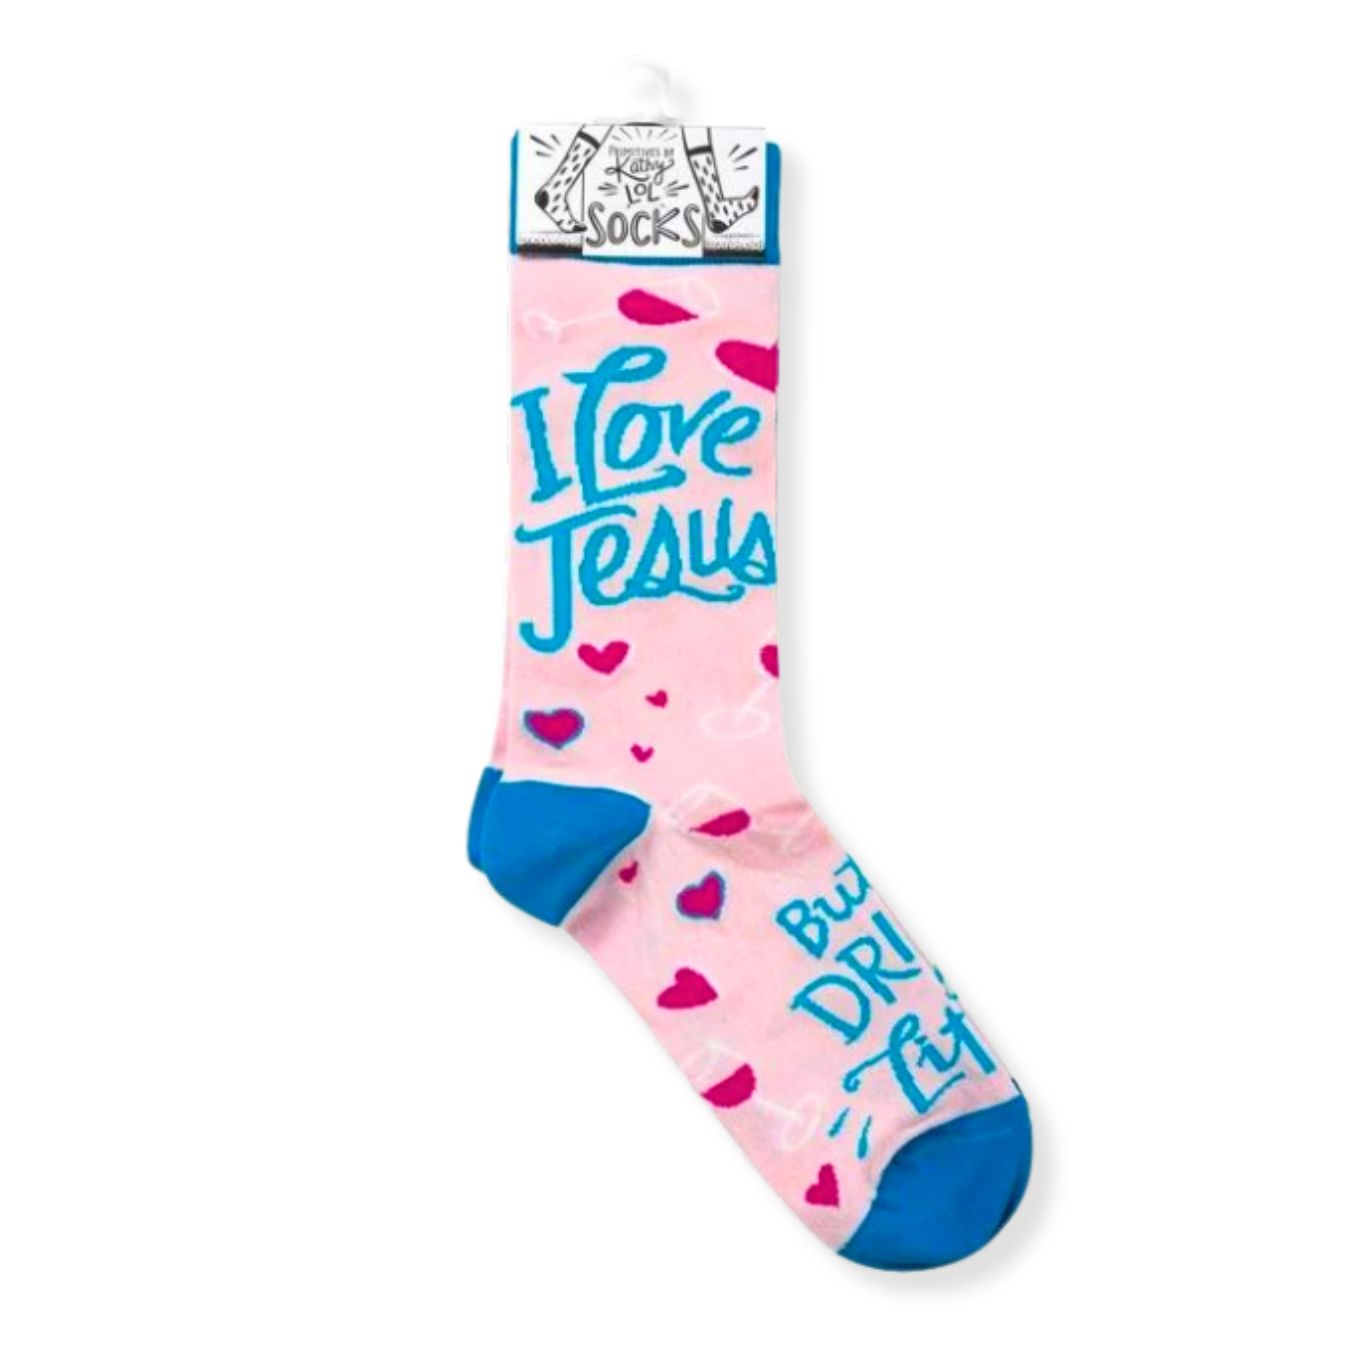 I Love Jesus But I Drink a Little Crew Socks in Pink Hearts